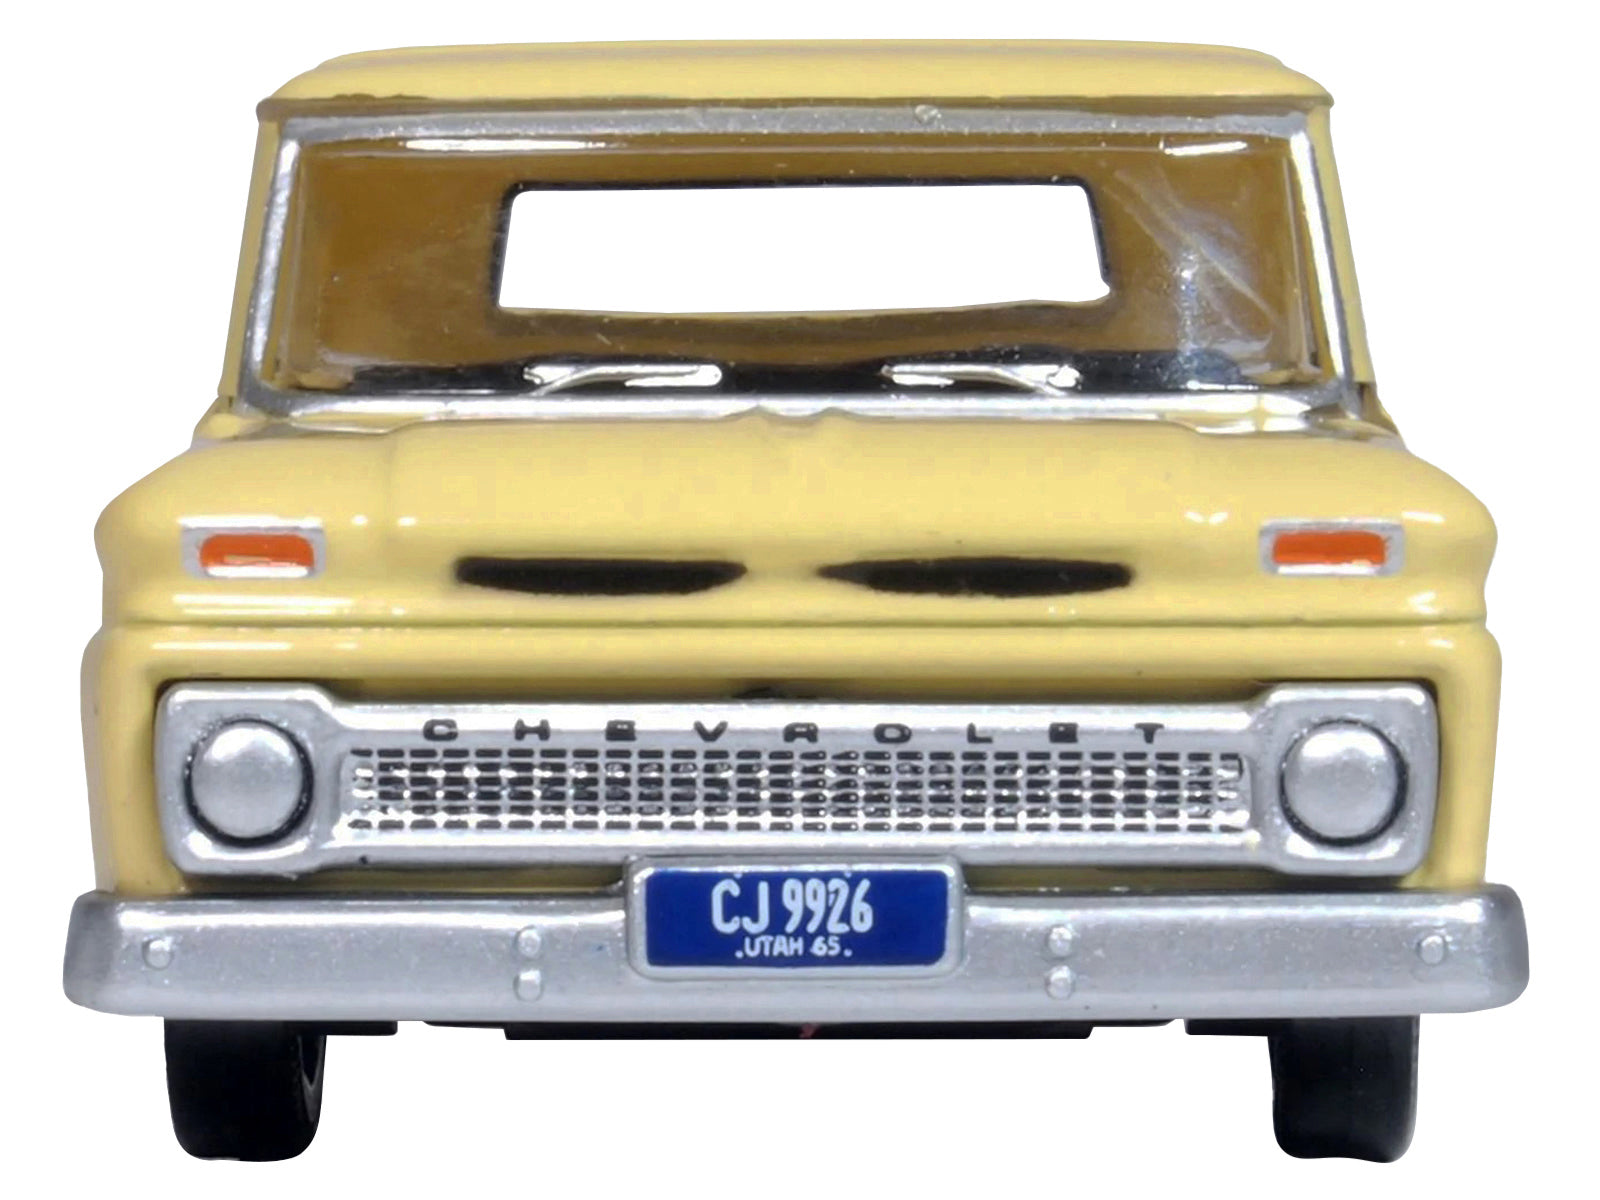 1965 chevrolet c10 stepside pickup truck yellow 1/87 ho scale diecast model car